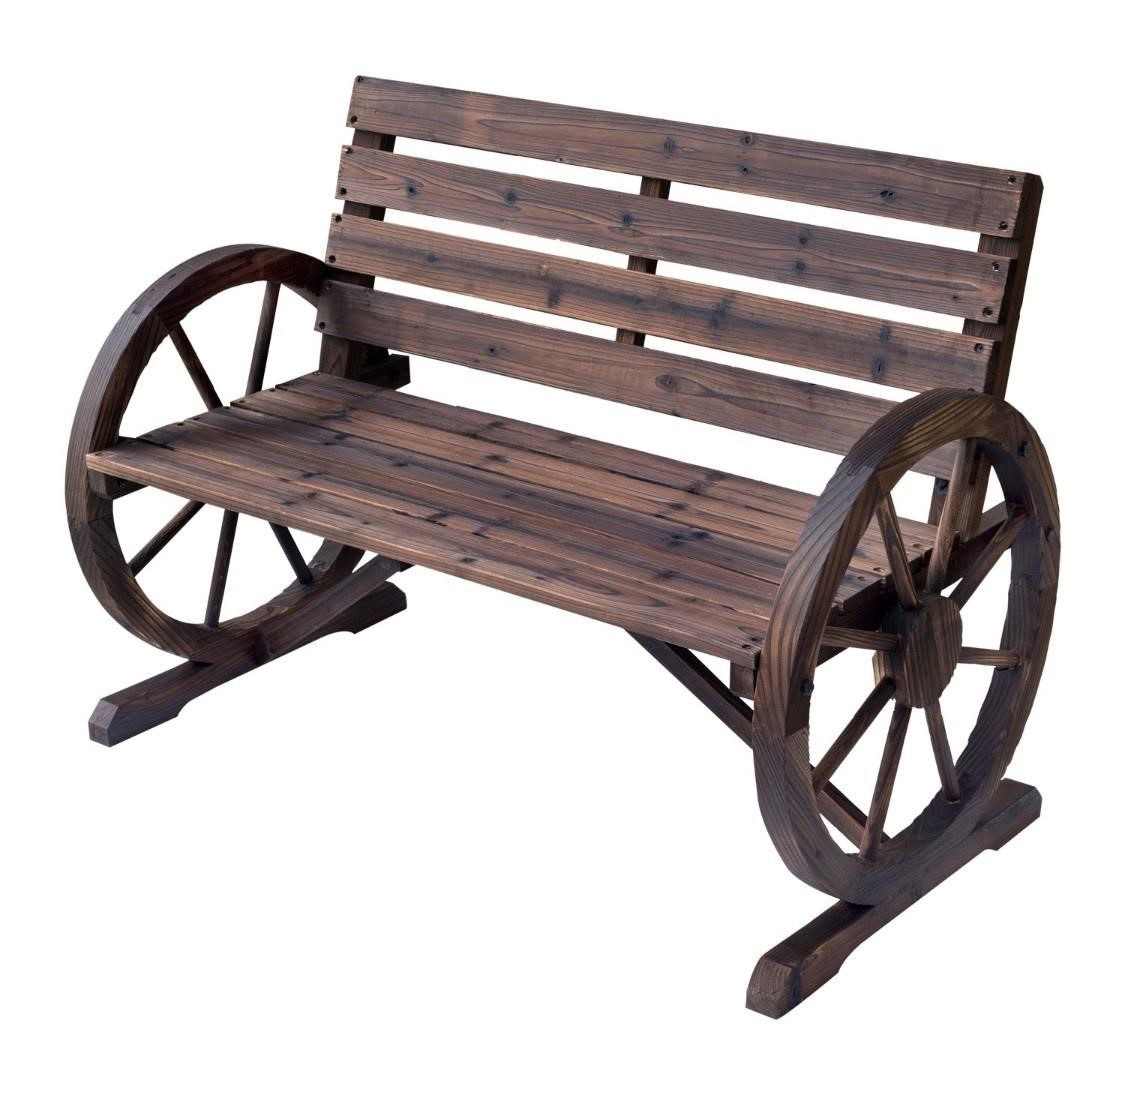 $86 41" Wooden Wagon Wheel Bench, Rustic